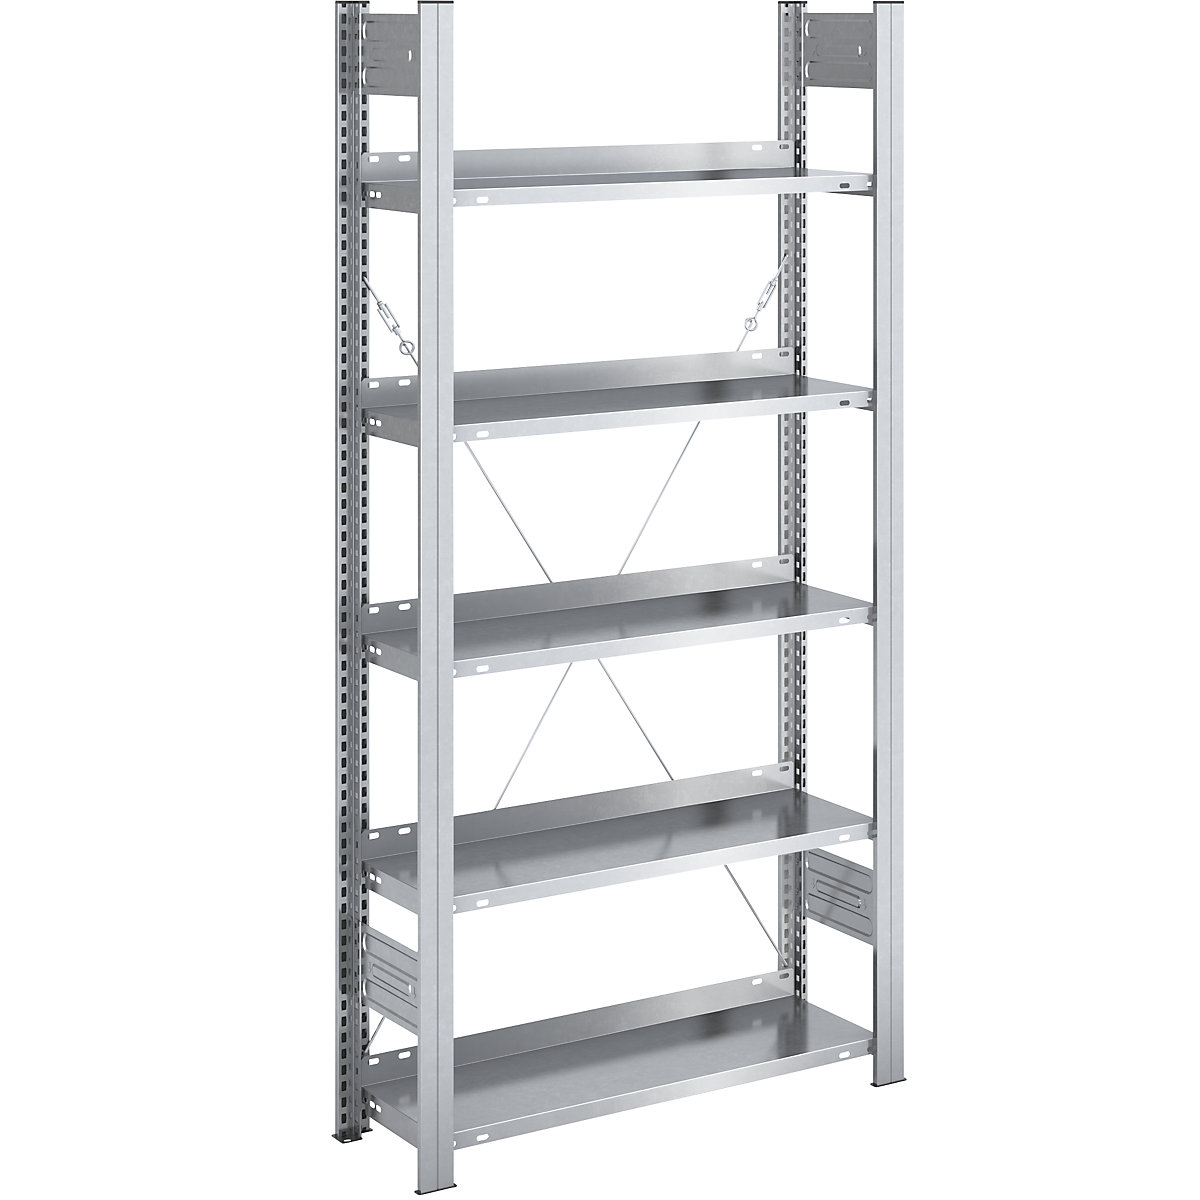 Boltless filing shelf unit, zinc plated – hofe, shelf height 1750 mm, single sided, standard shelf unit, WxD 750 x 300 mm-4